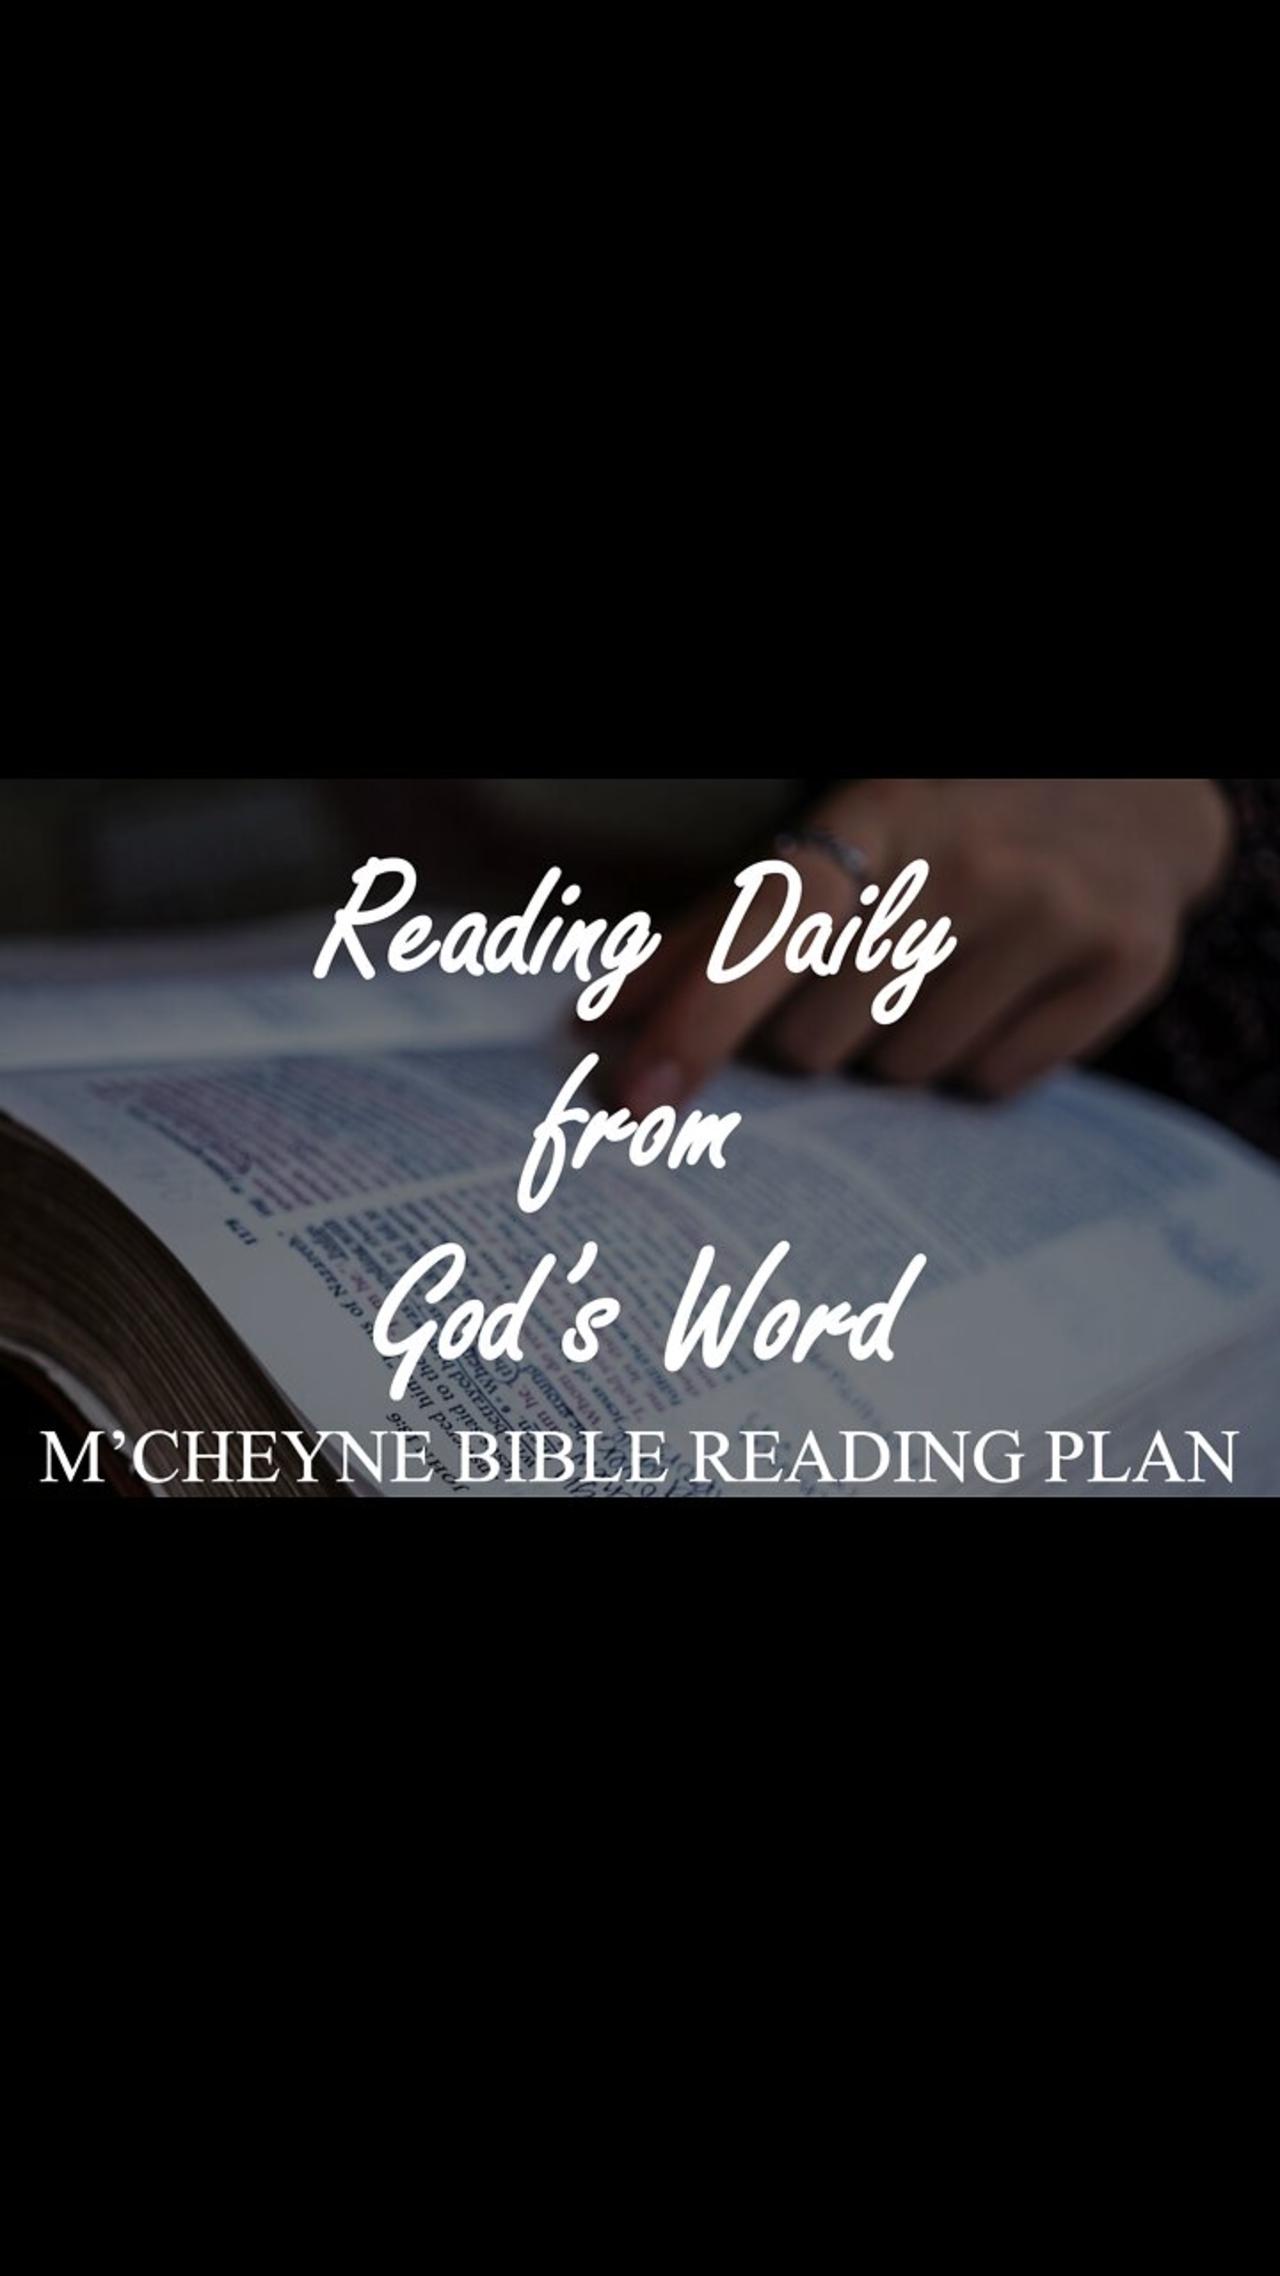 M’CHEYNE BIBLE READING PLAN - September 18